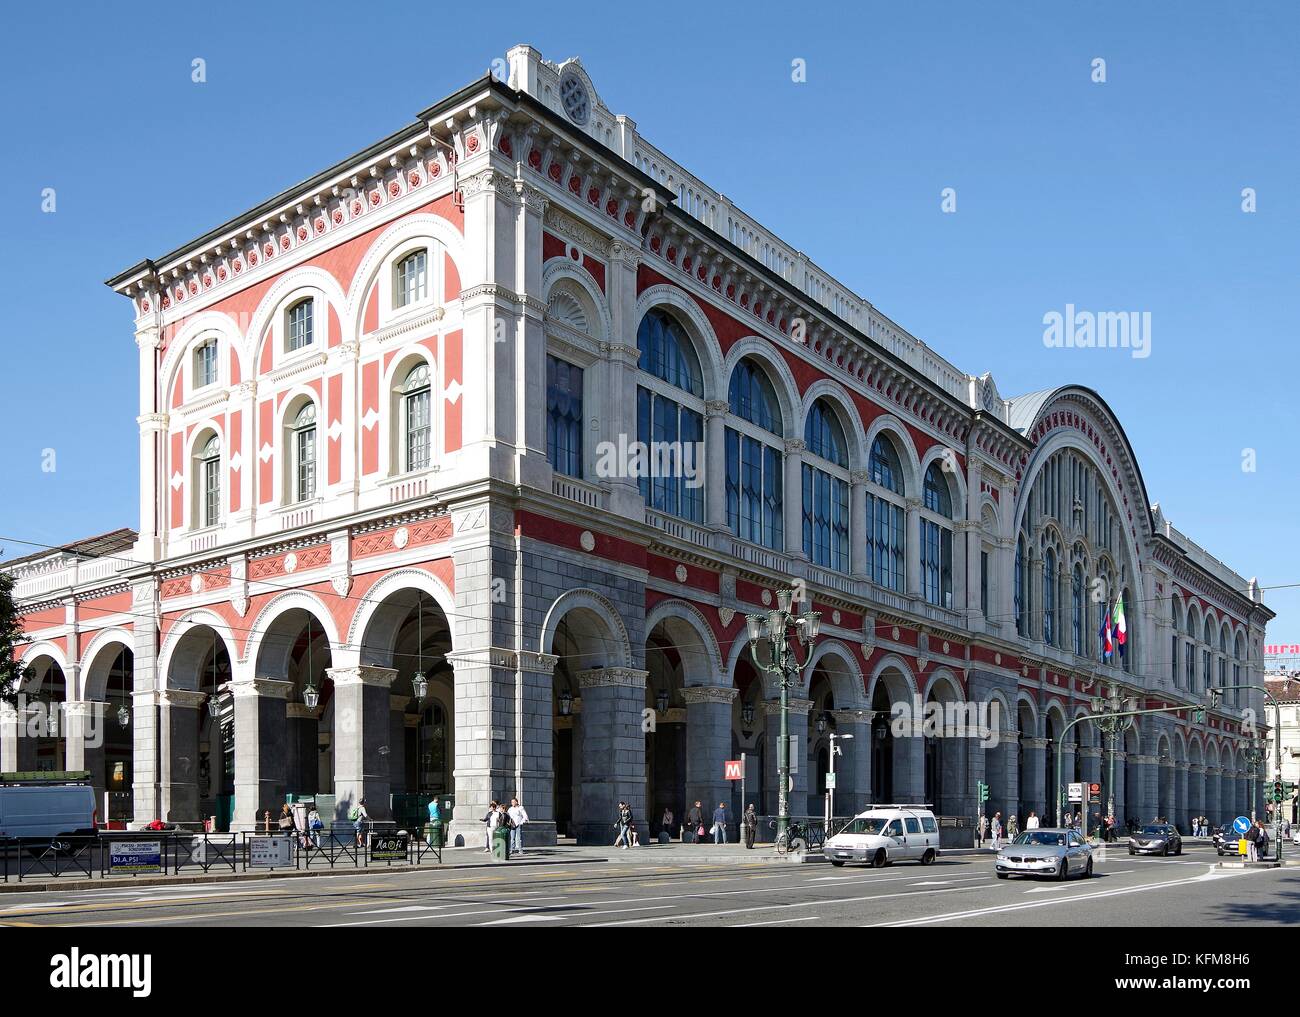 Torino porta nuova railway station hi-res stock photography and images -  Alamy